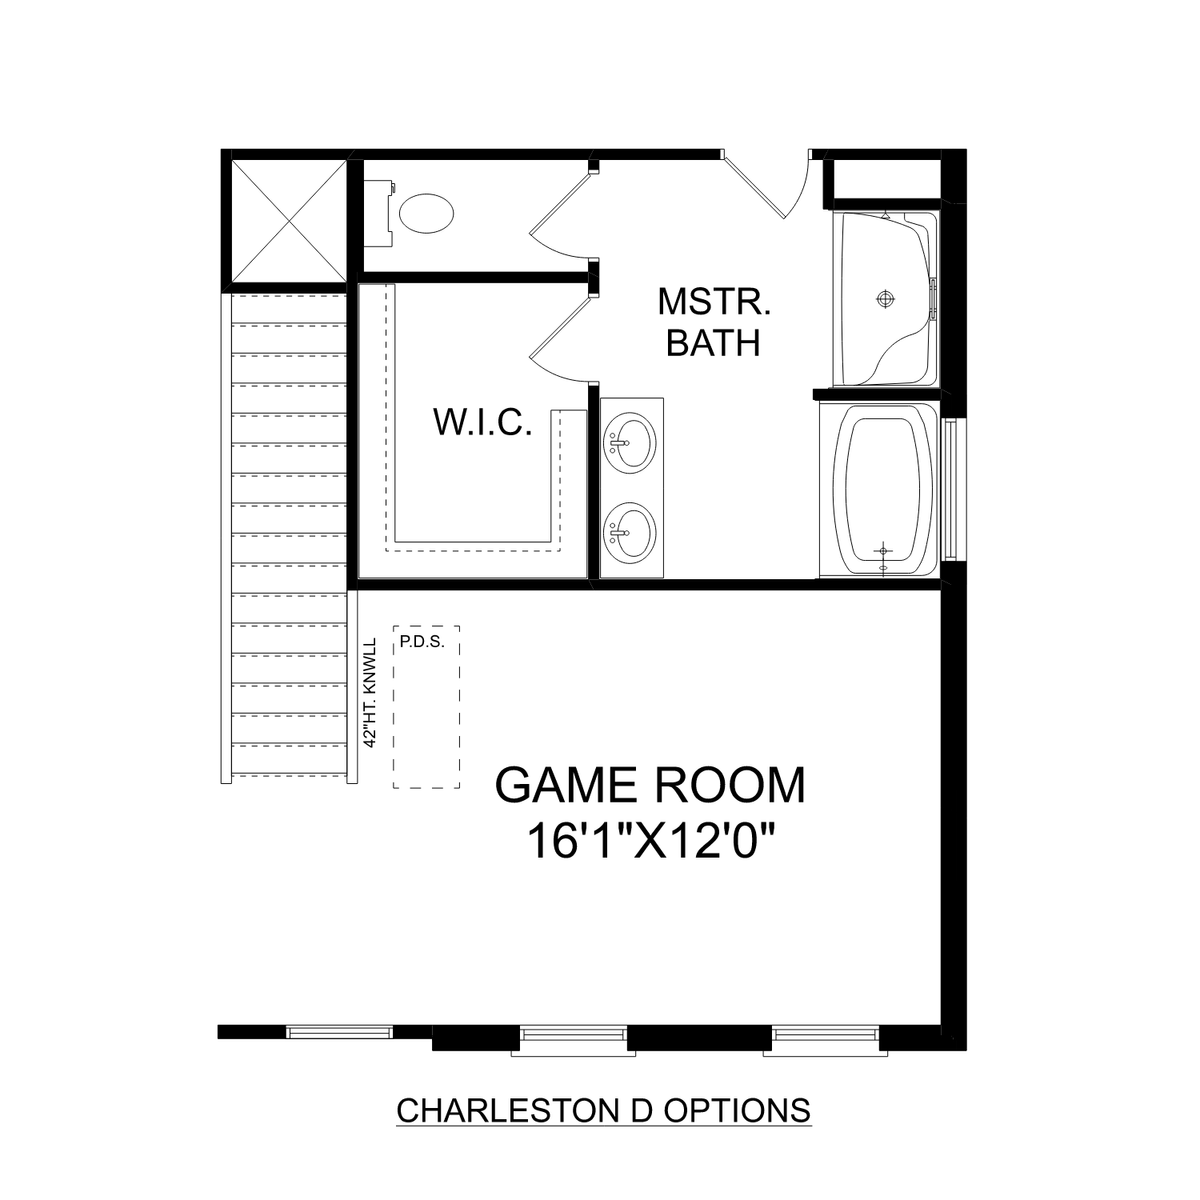 3 - The Charleston D buildable floor plan layout in Davidson Homes' Mallard Landing community.